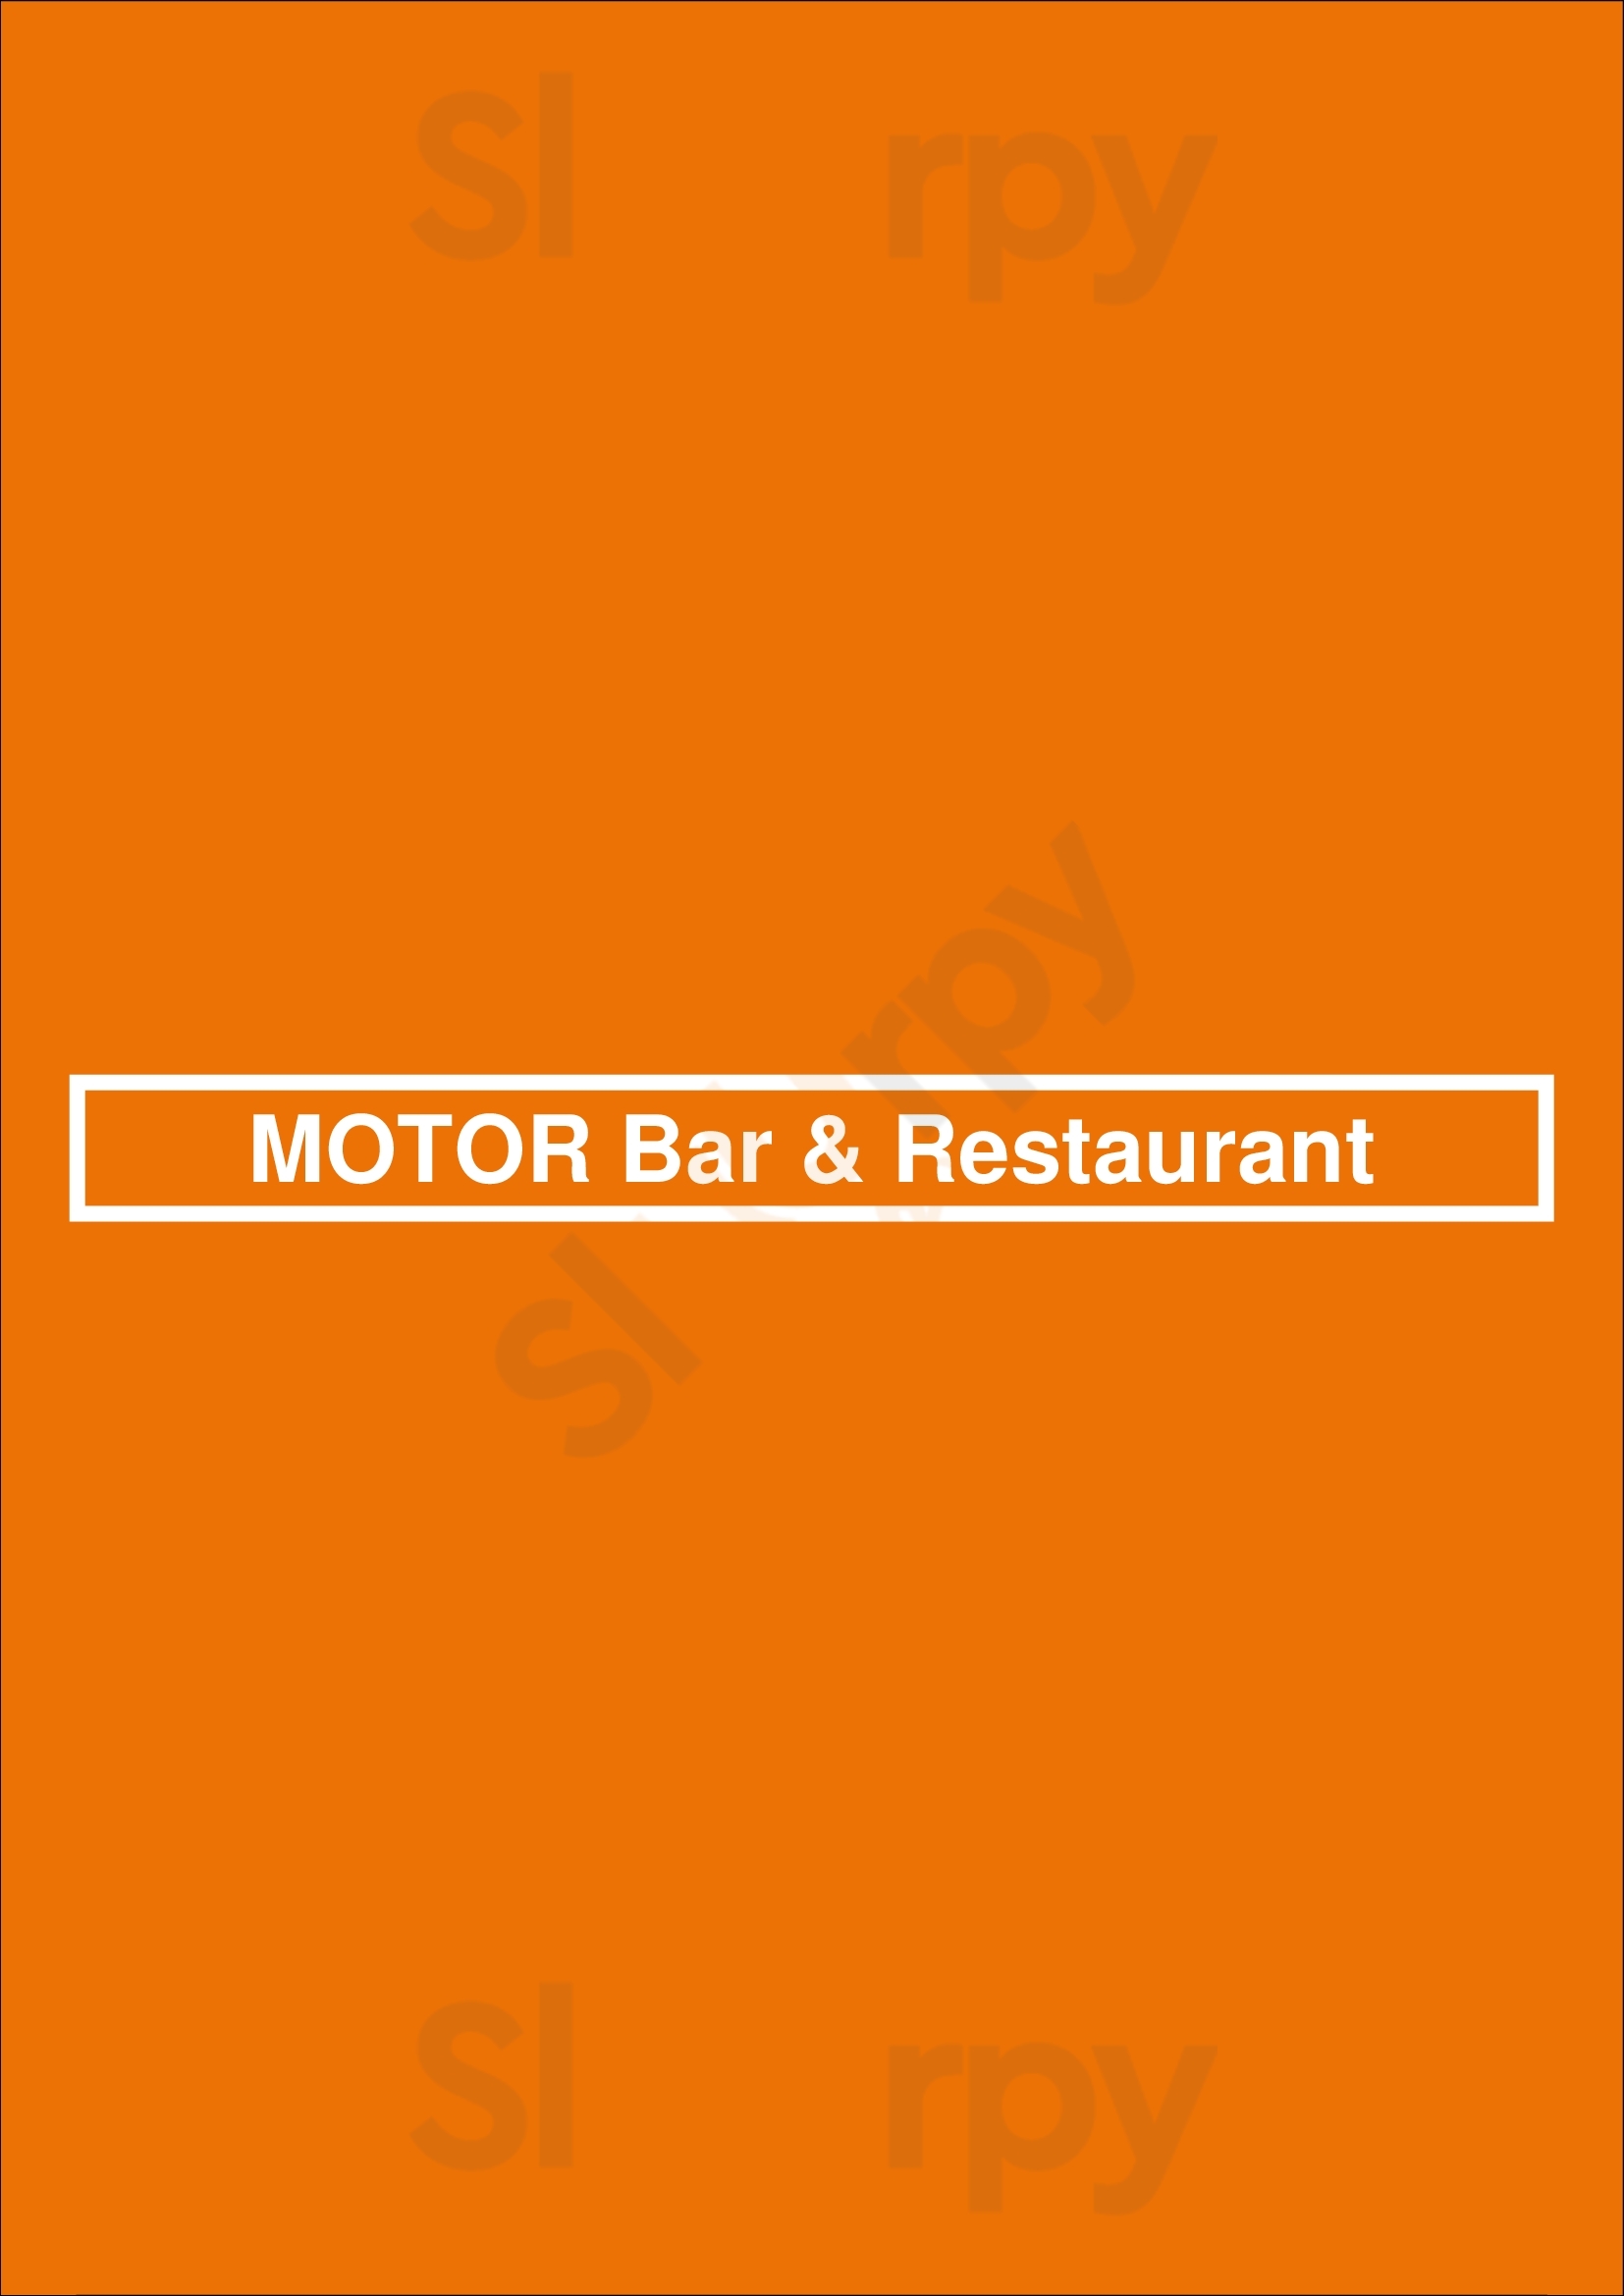 Motor Bar & Restaurant Milwaukee Menu - 1